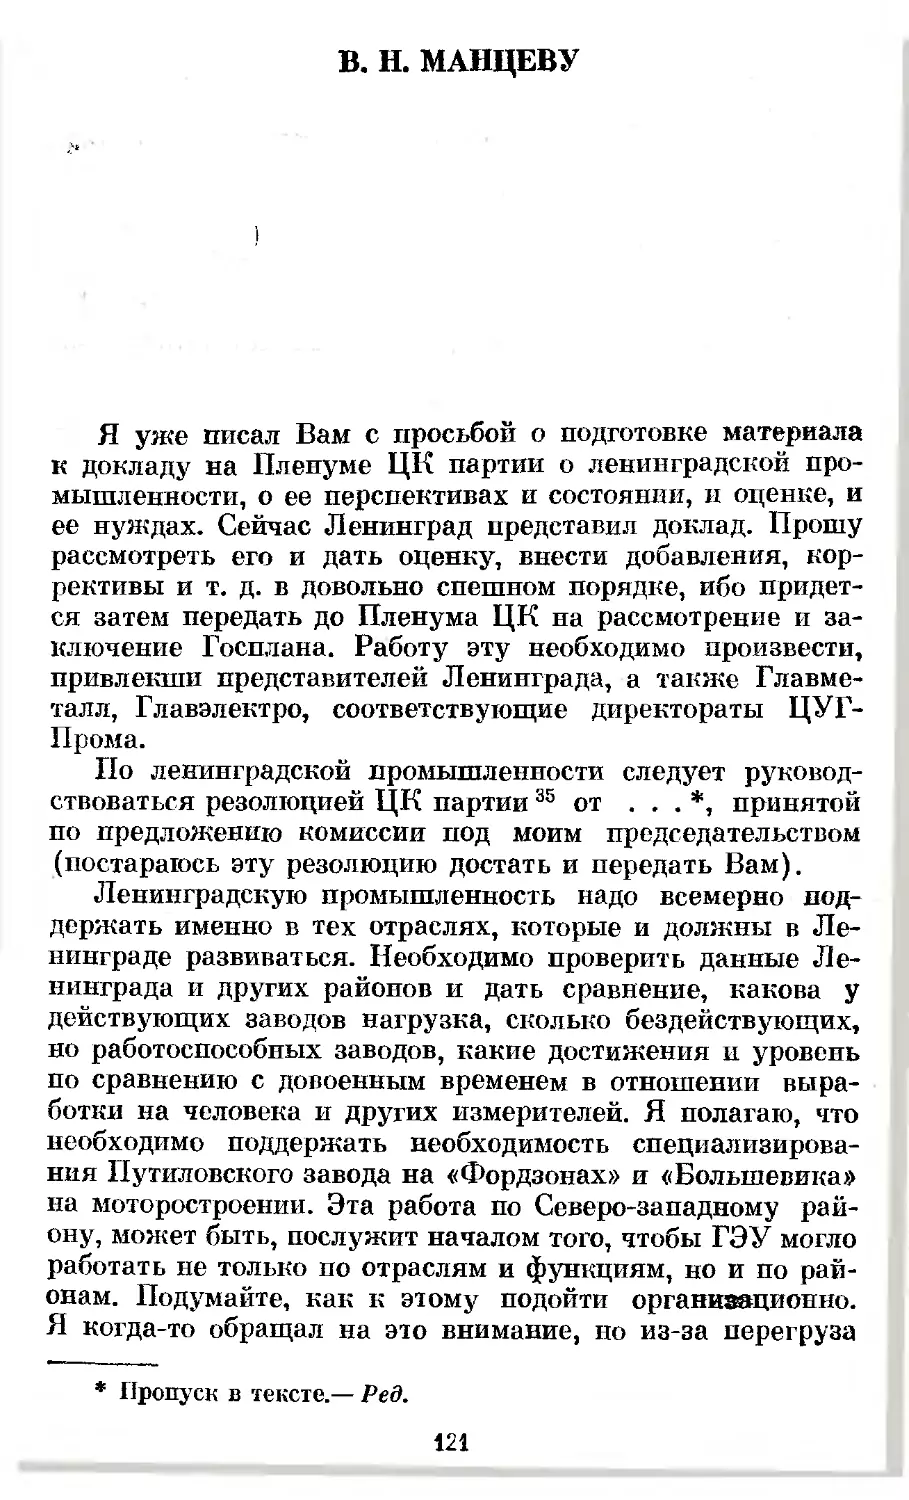 В. Н. Манцеву. 22 декабря 1924 г